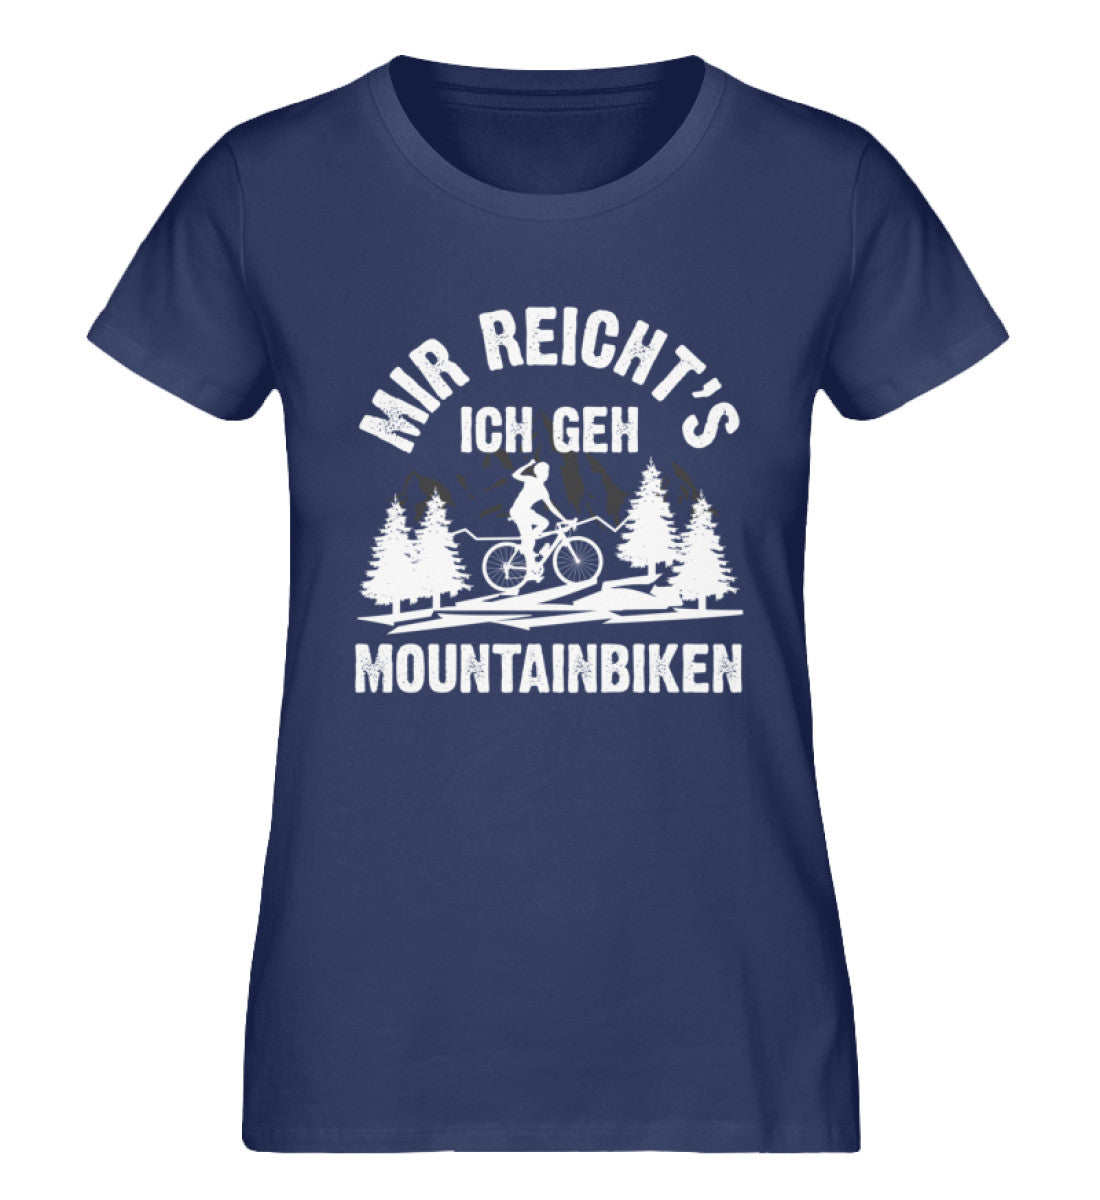 Mir reicht's ich geh mountainbiken - Damen Organic T-Shirt mountainbike Navyblau